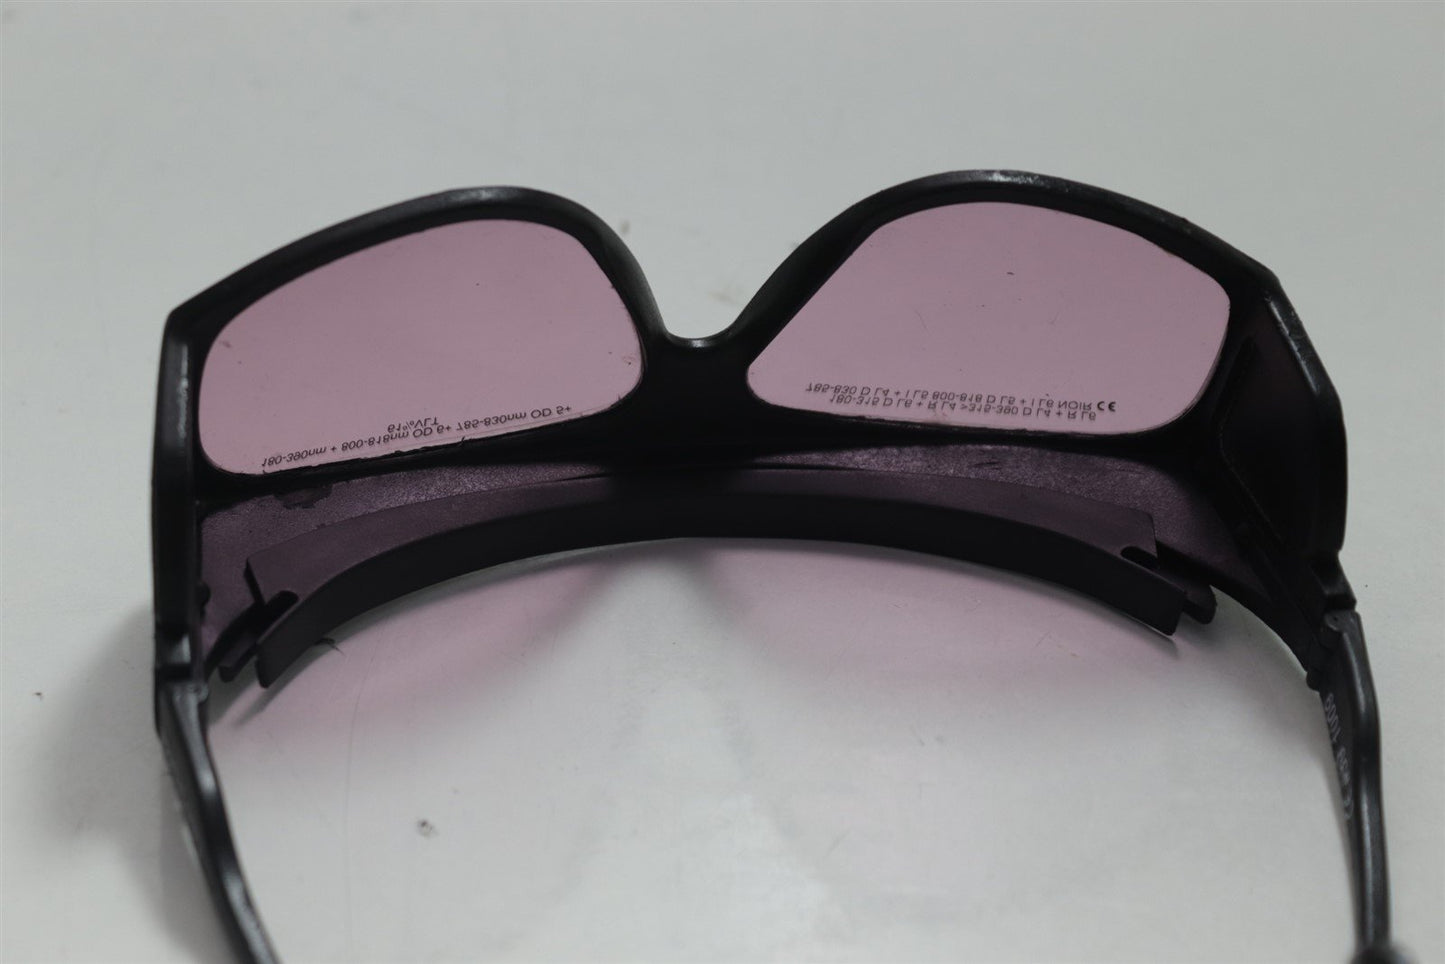 Alma Soprano NoIR LaserShields DI2 Protective Safety Glasses 808-810nm USA